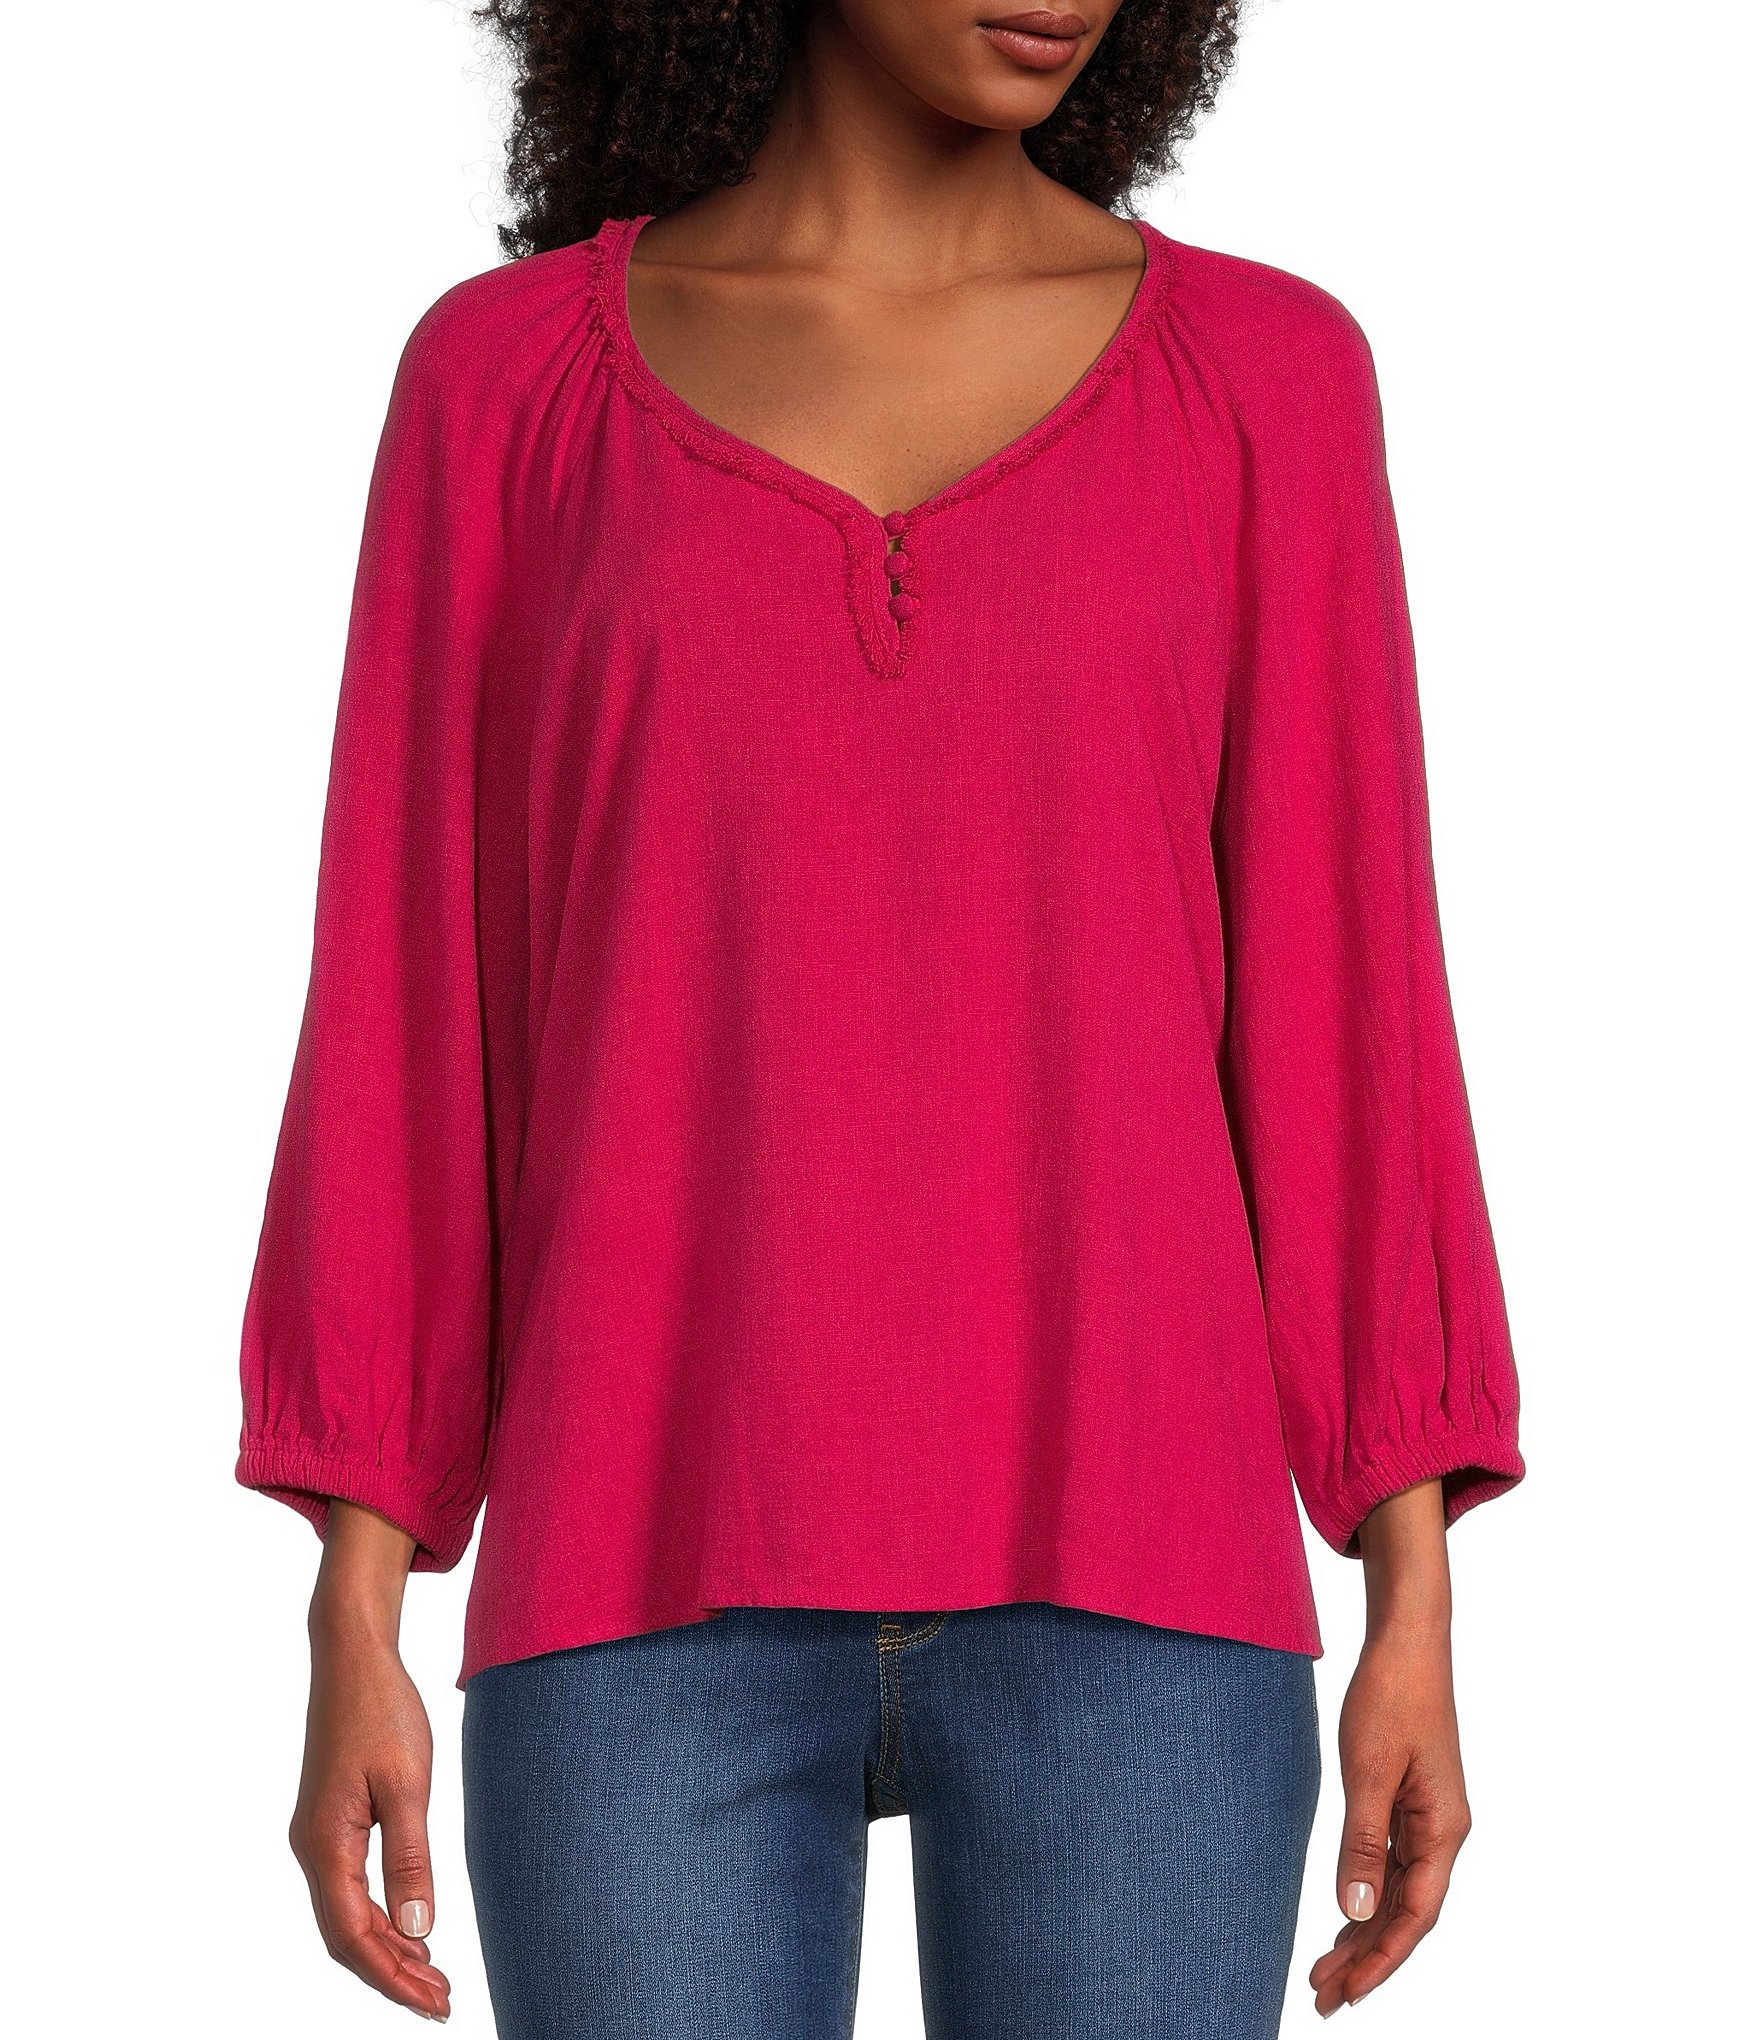 Pink Women's Clothing & Apparel | Dillard's